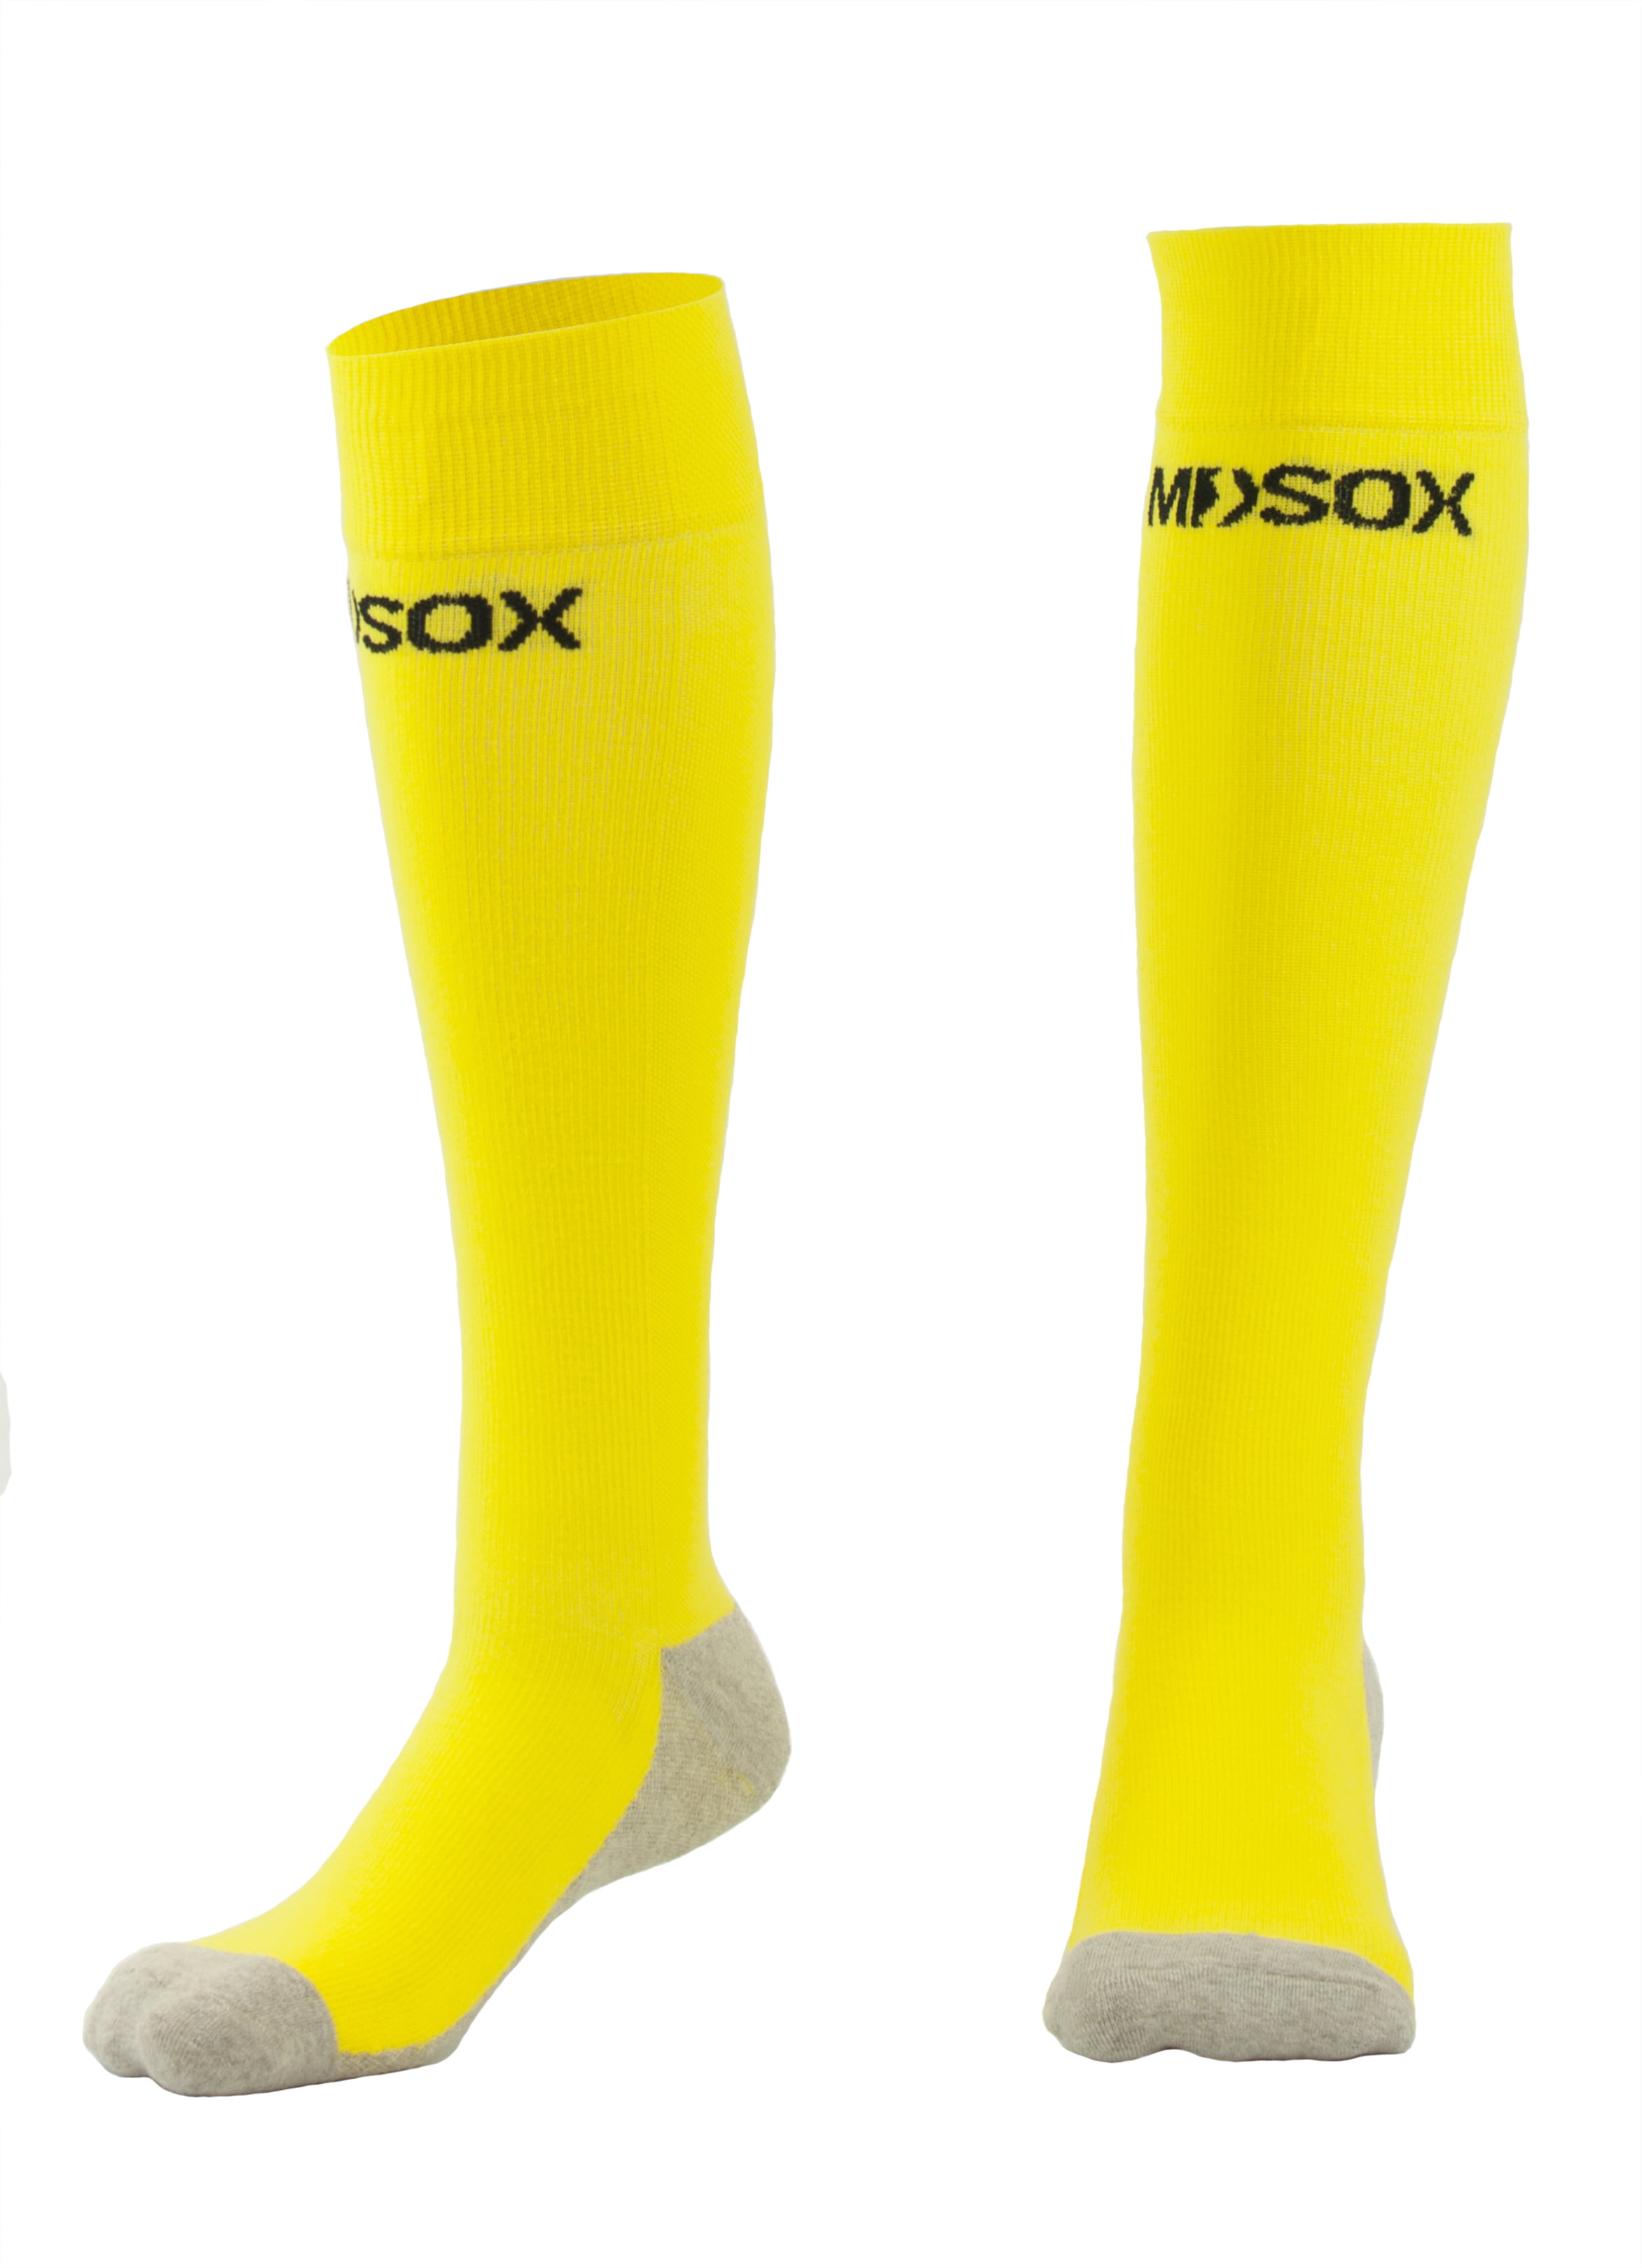 Compression Socks for Women and Men-Best Medical,for Running,Nursing,Circulation & Recovery Hiking Travel & Flight Socks-20-25mmHg 